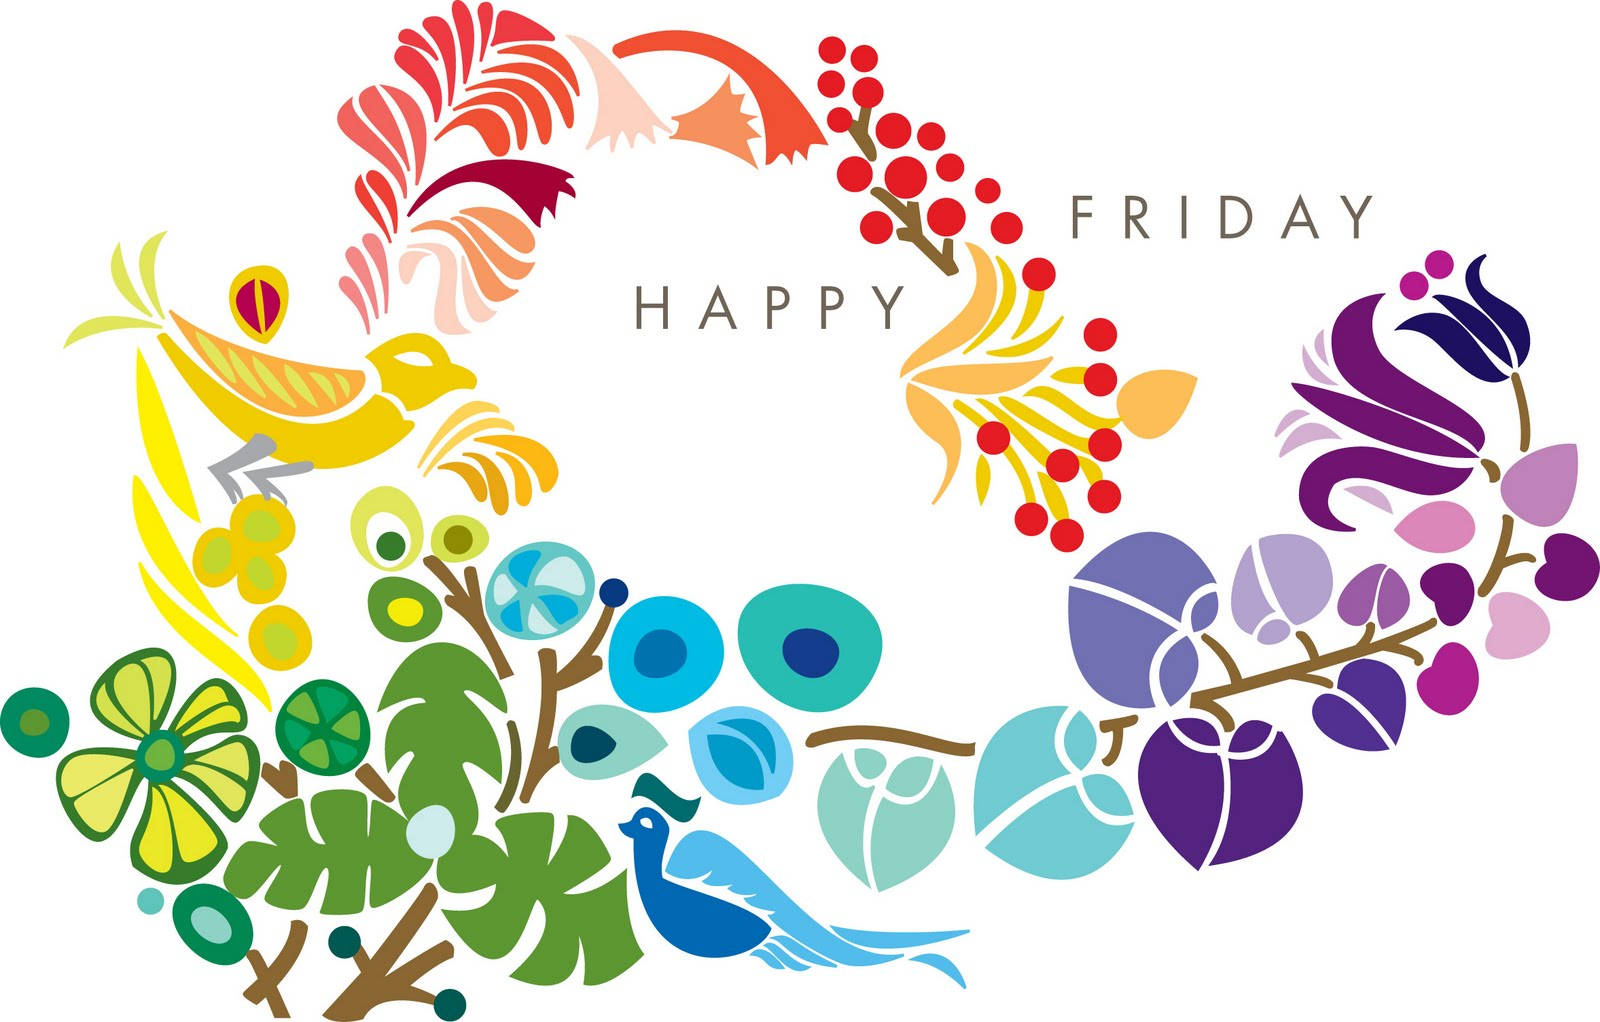 Happy Friday Floral Vector Art Wallpaper